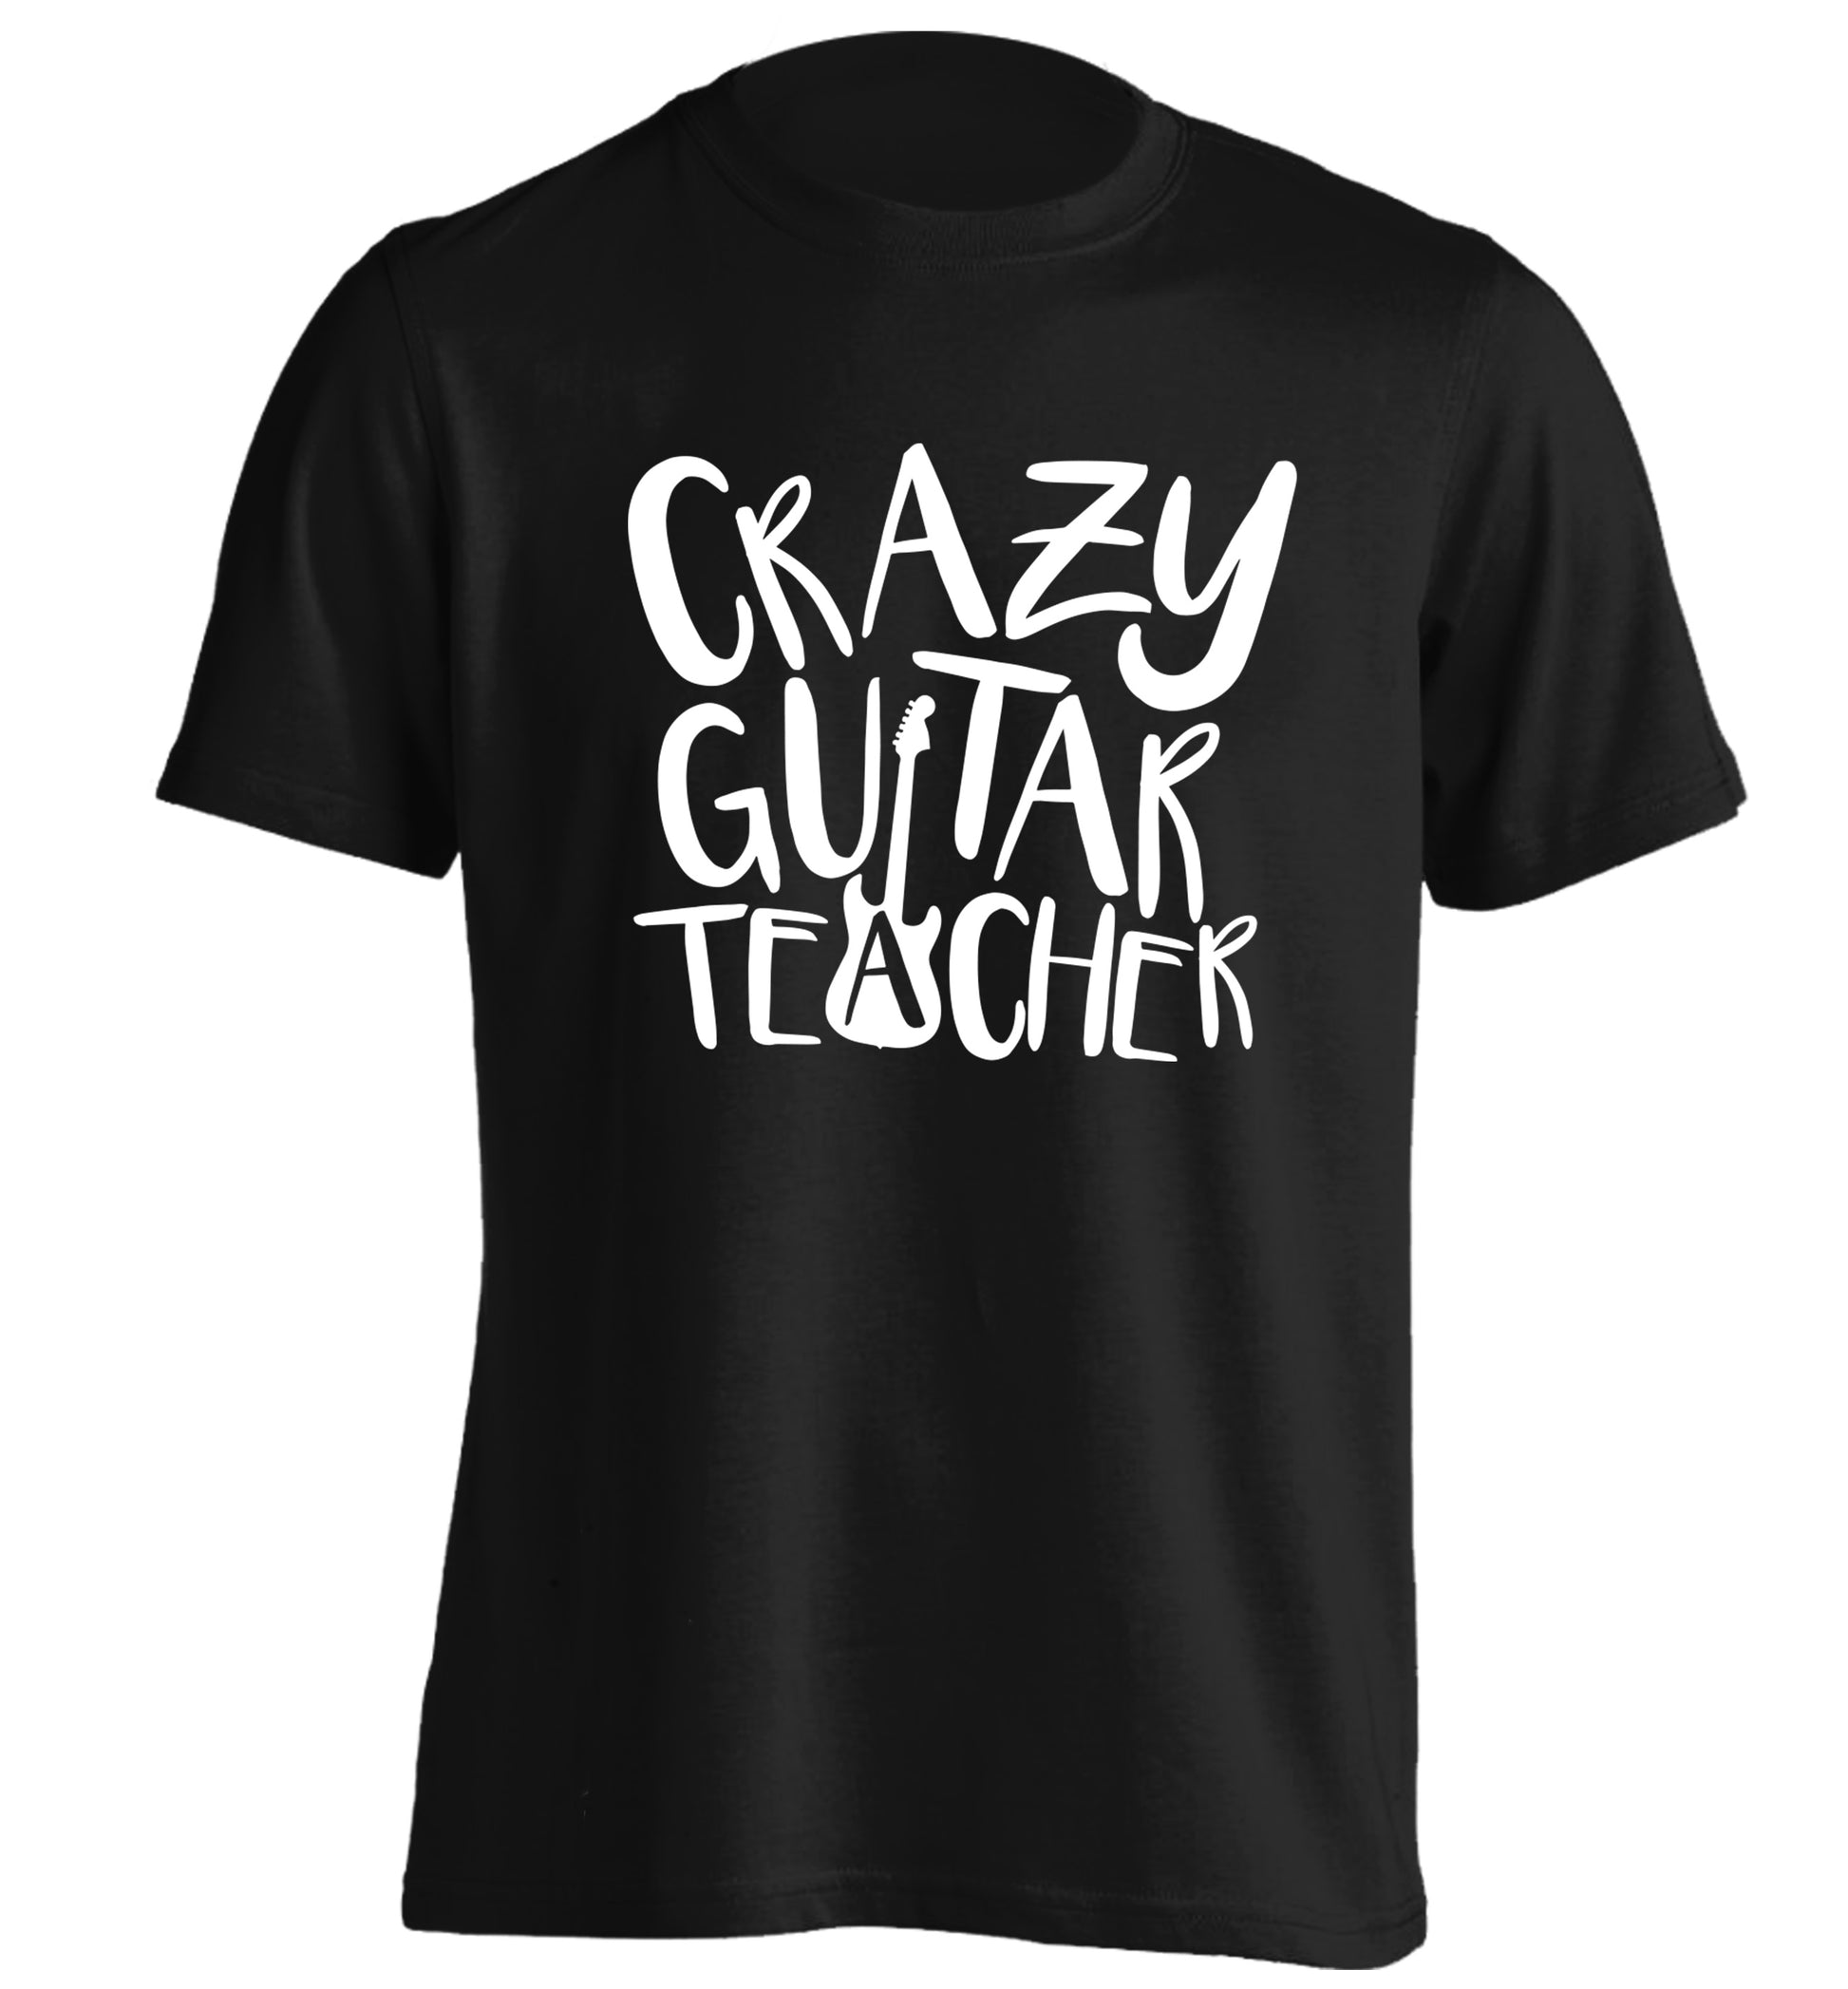 Crazy guitar teacher adults unisex black Tshirt 2XL